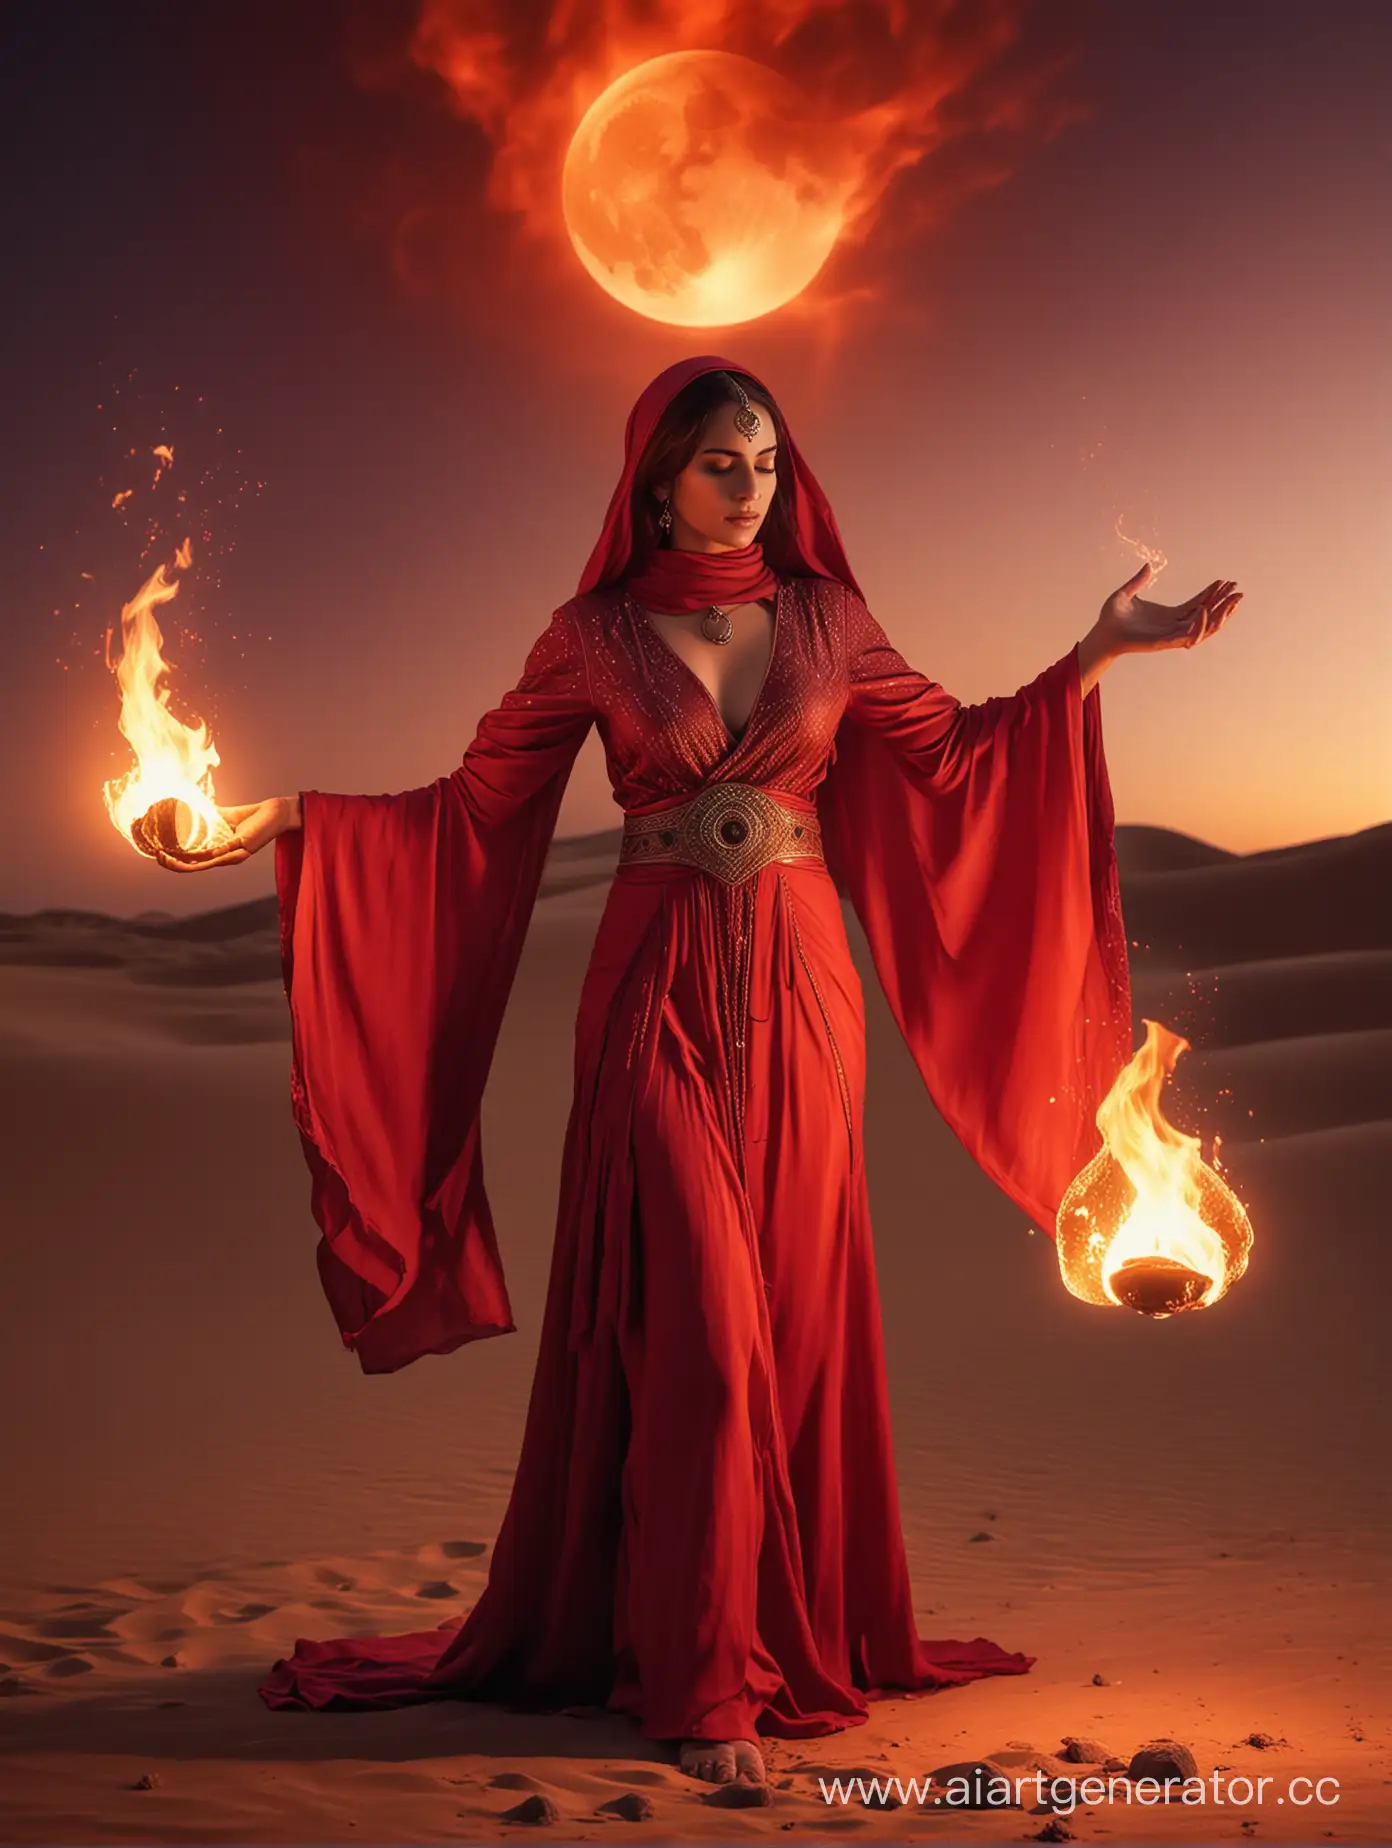 Arabian-Woman-Conjuring-Fire-Magic-in-Desert-Under-Red-Moon